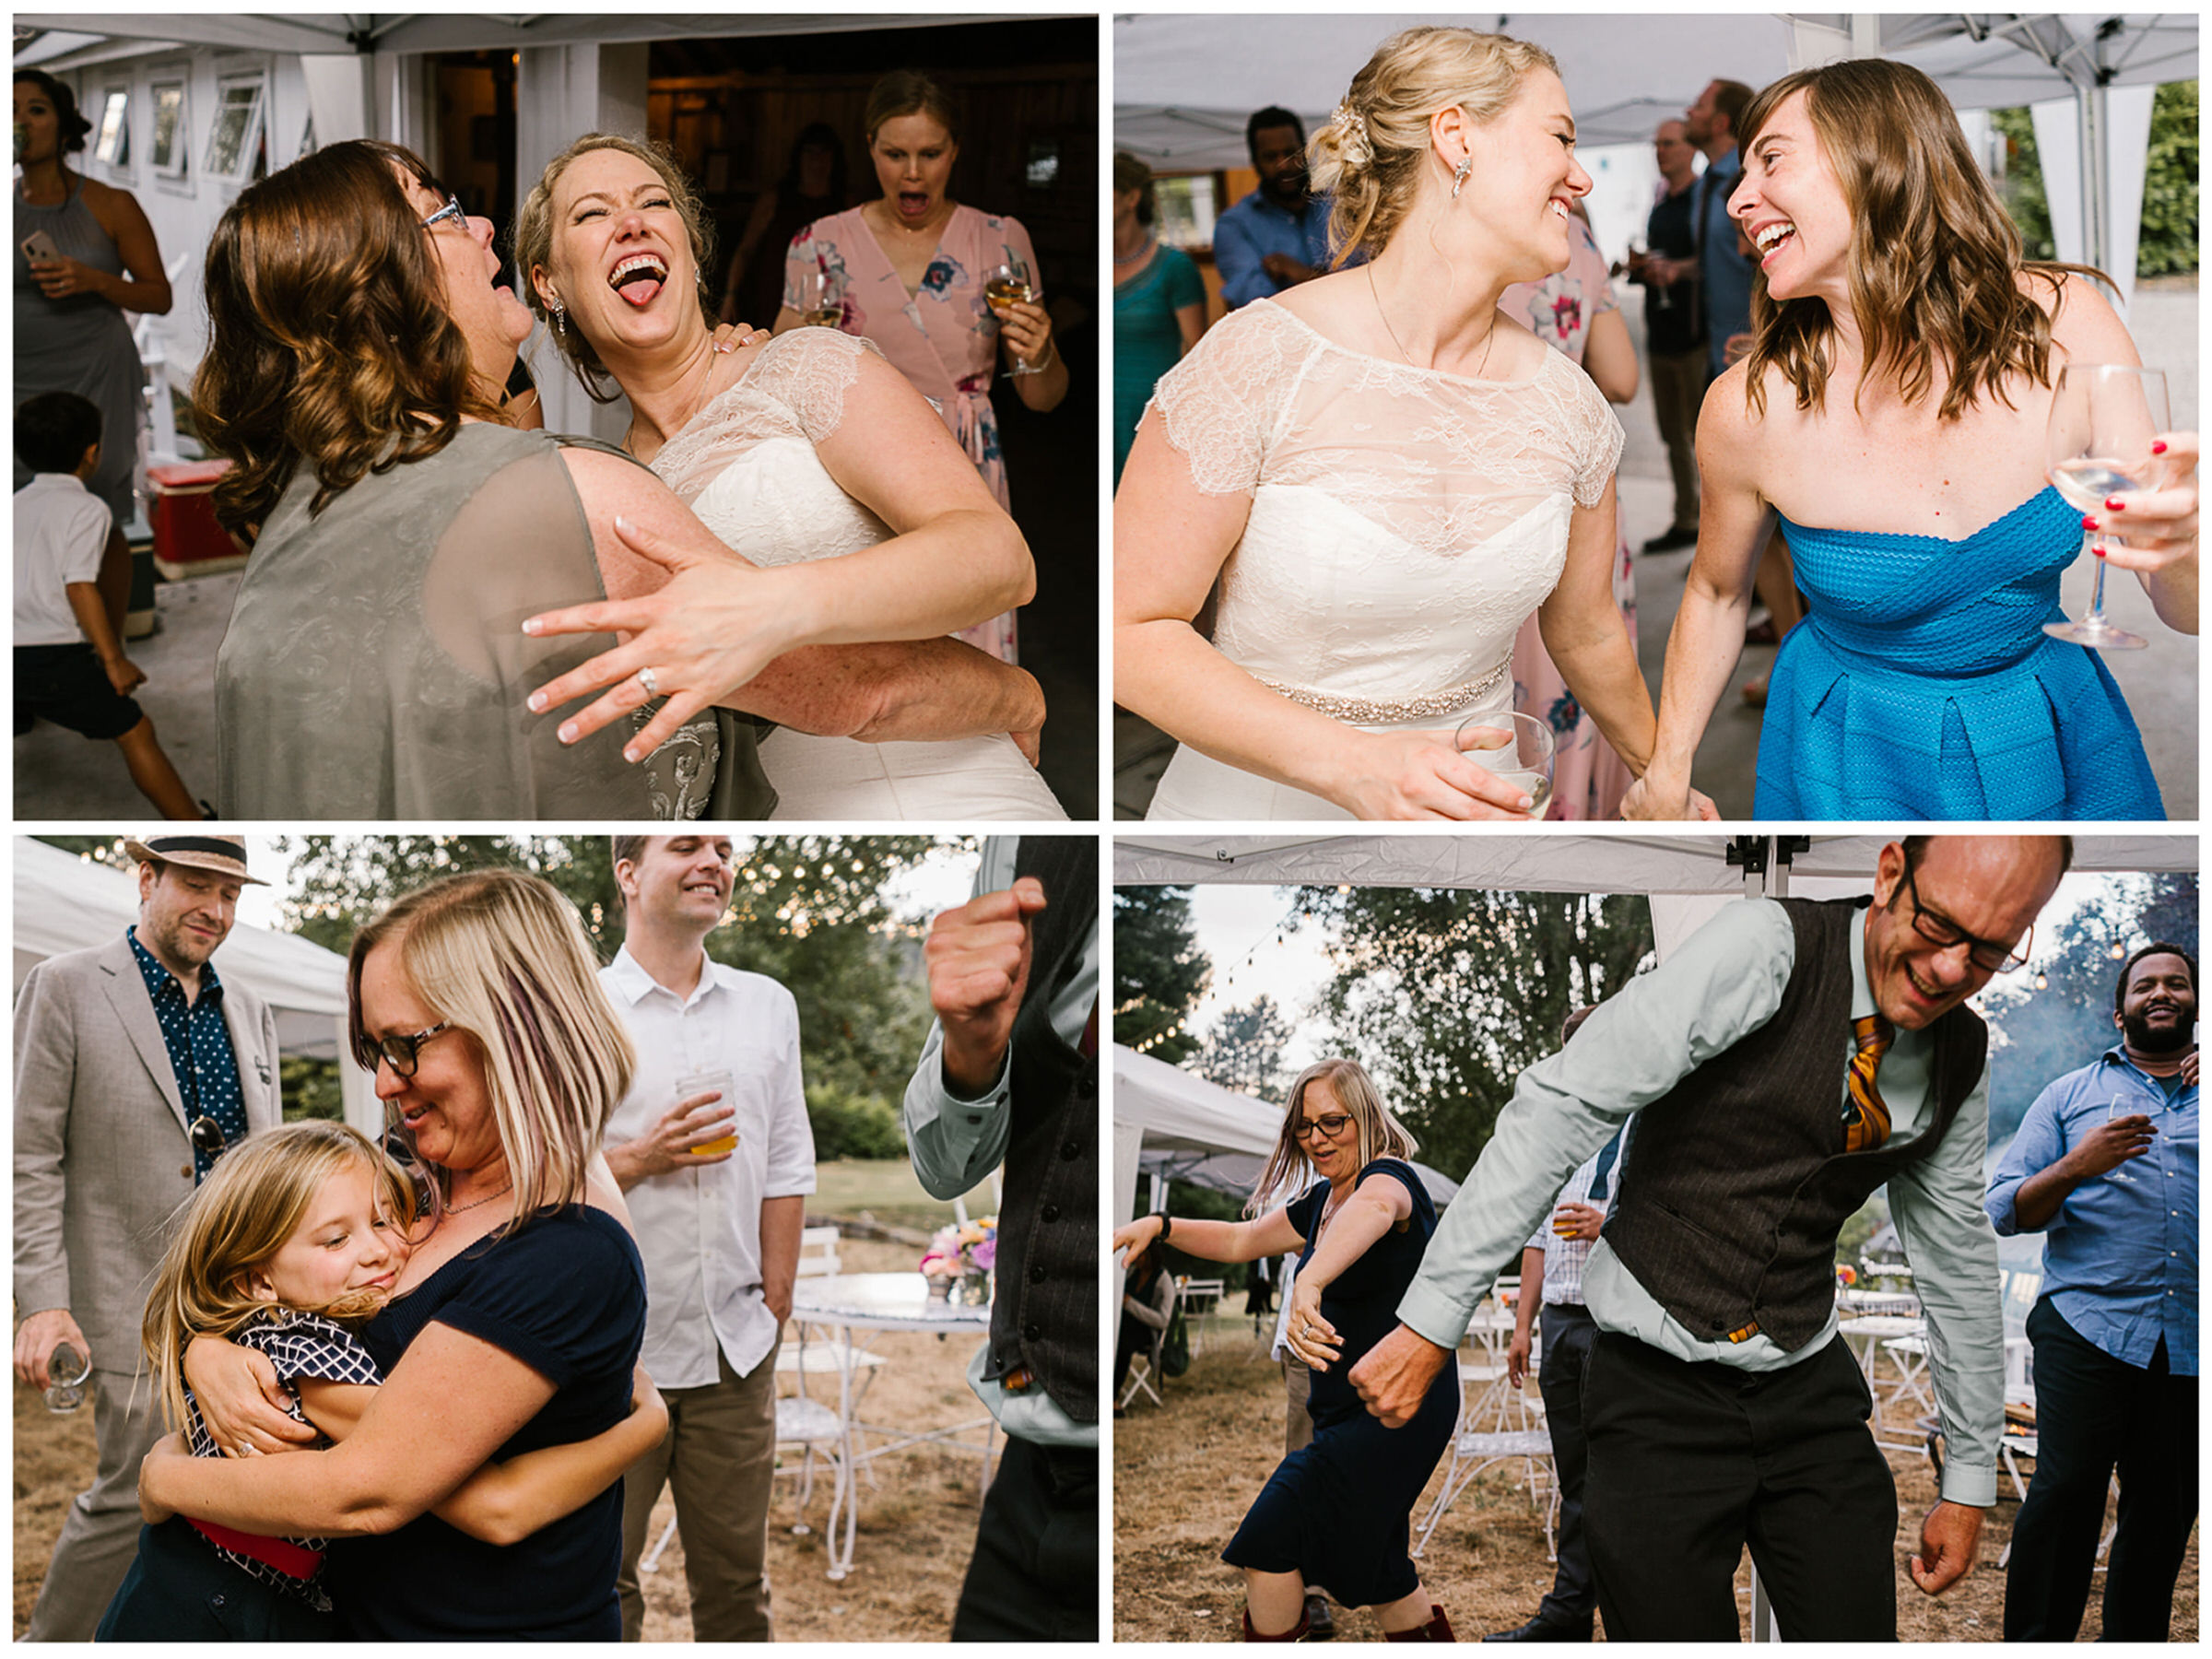 Wayfarer Whidbey Island Wedding: Sara and Joe's dance party at their wedding reception